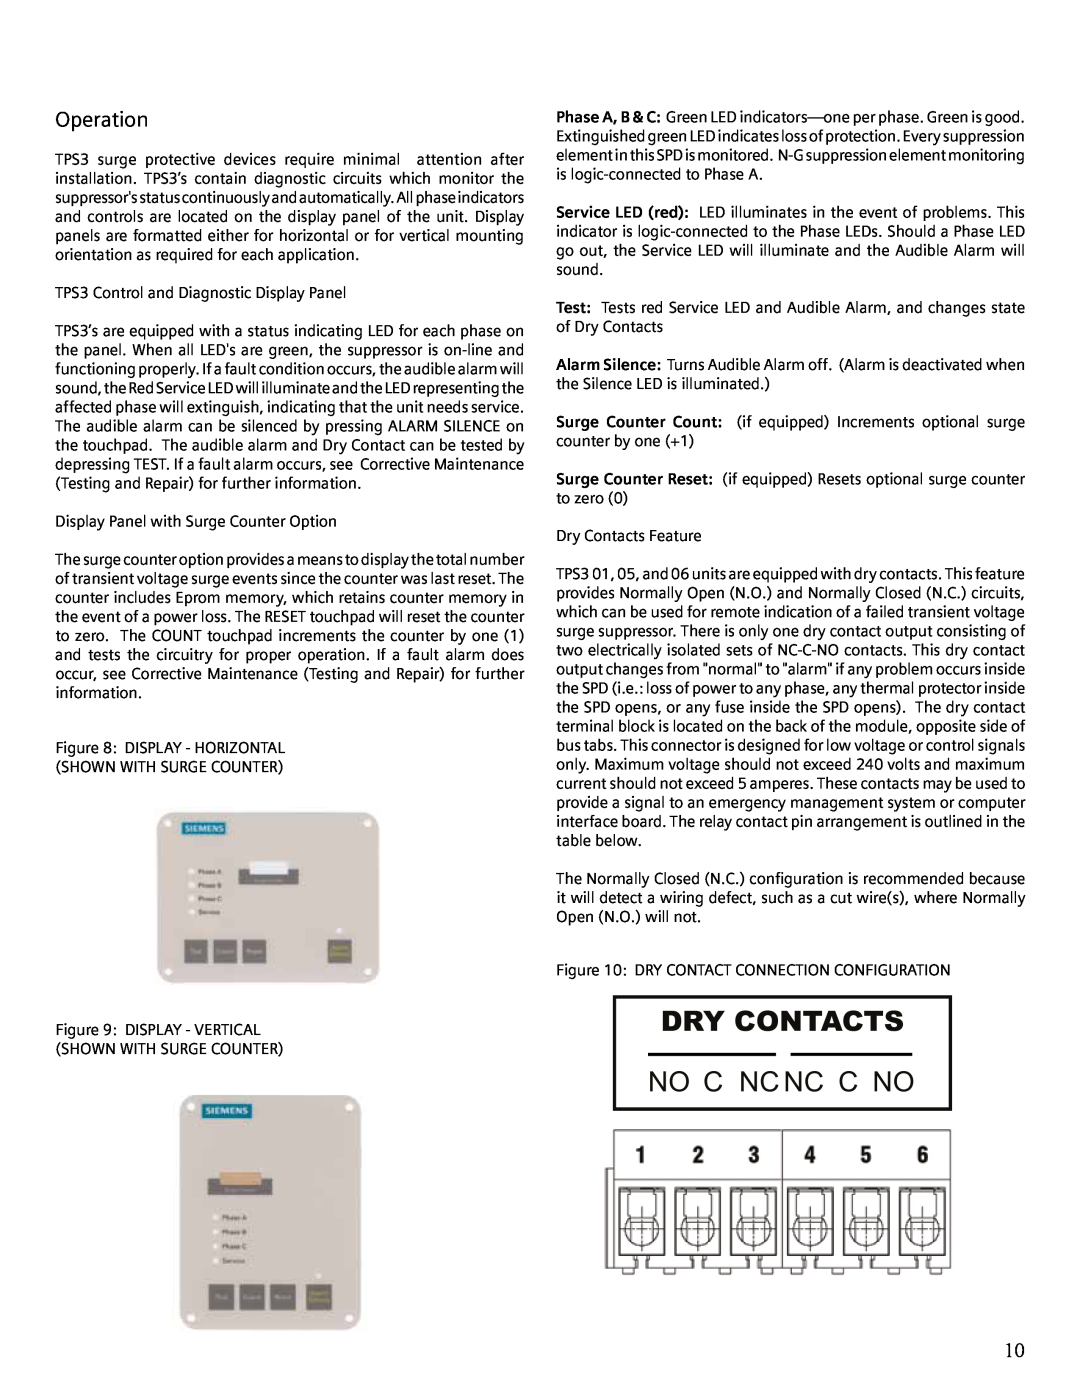 Siemens TPS3 user manual Operation, Dry Contacts, No C Ncnc C No 